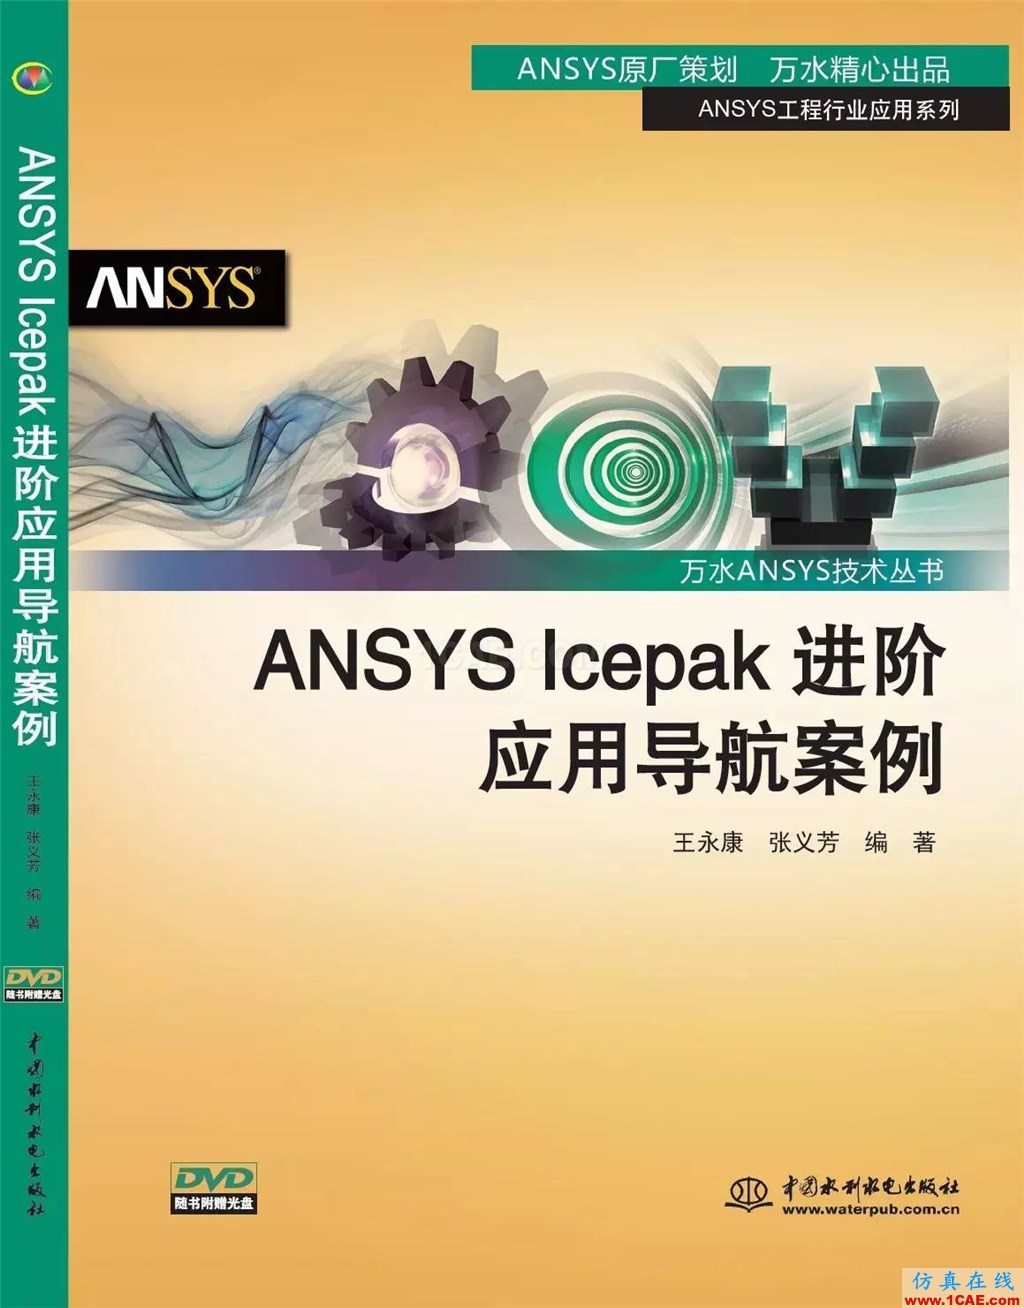 《ANSYS Icepak进阶应用导航案例》新书推荐icepak学习资料图片1